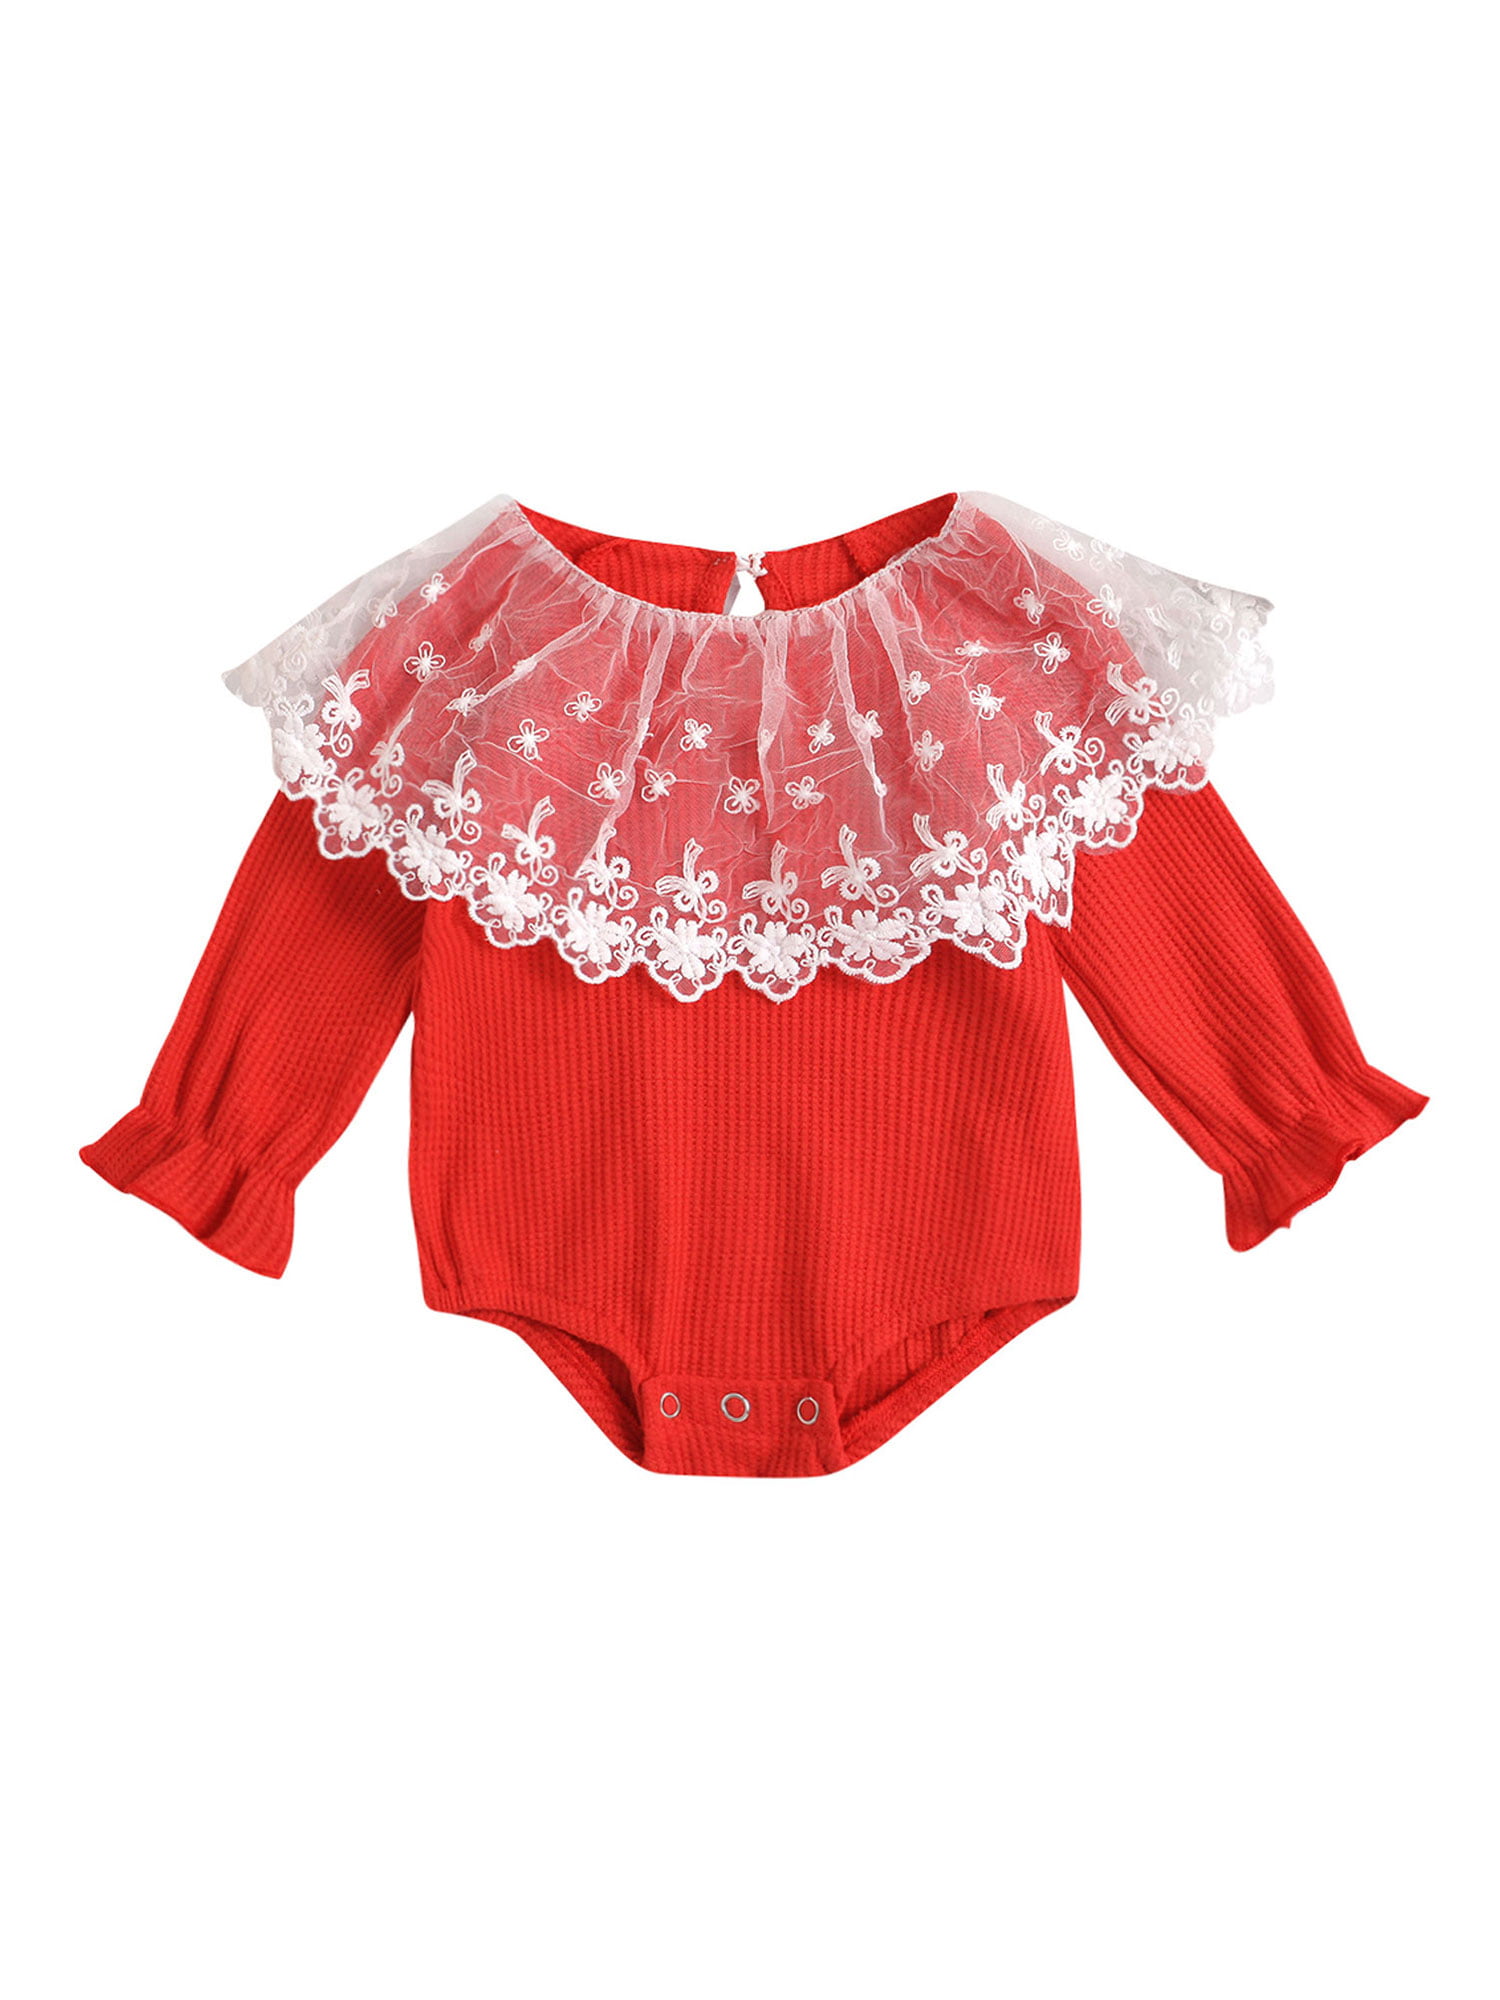 Fanvereka Infant Newborn Baby Girl Jumpsuit Long Sleeve Lace Floral ...